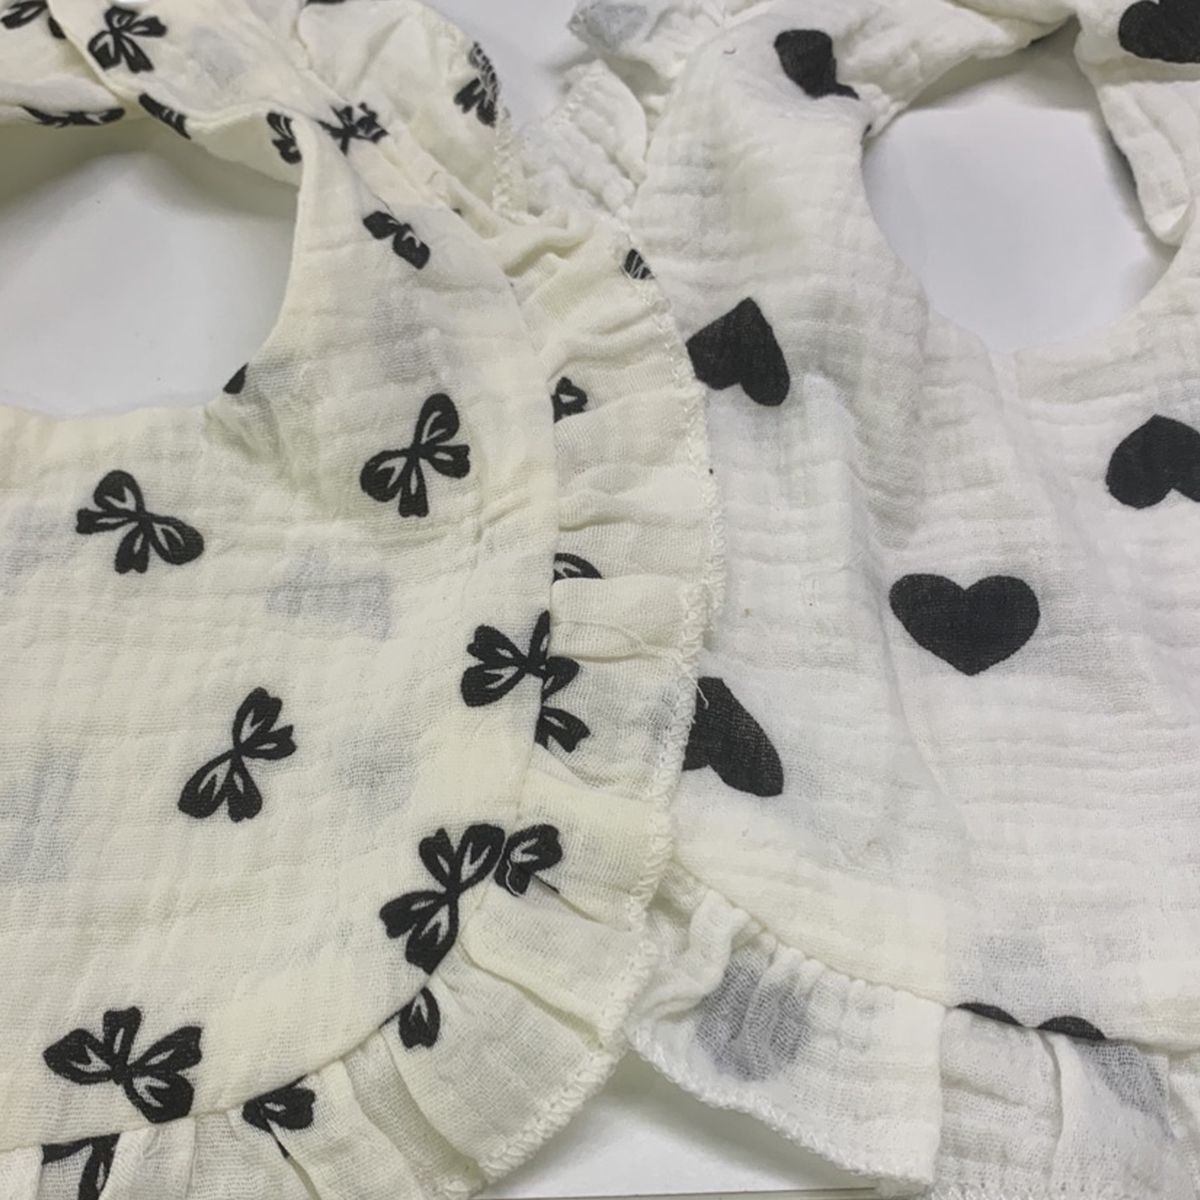 100% Cotton Ruffle Soft Comfy Breathable Gauze Fabric Unisex Babies' Teething Bibs